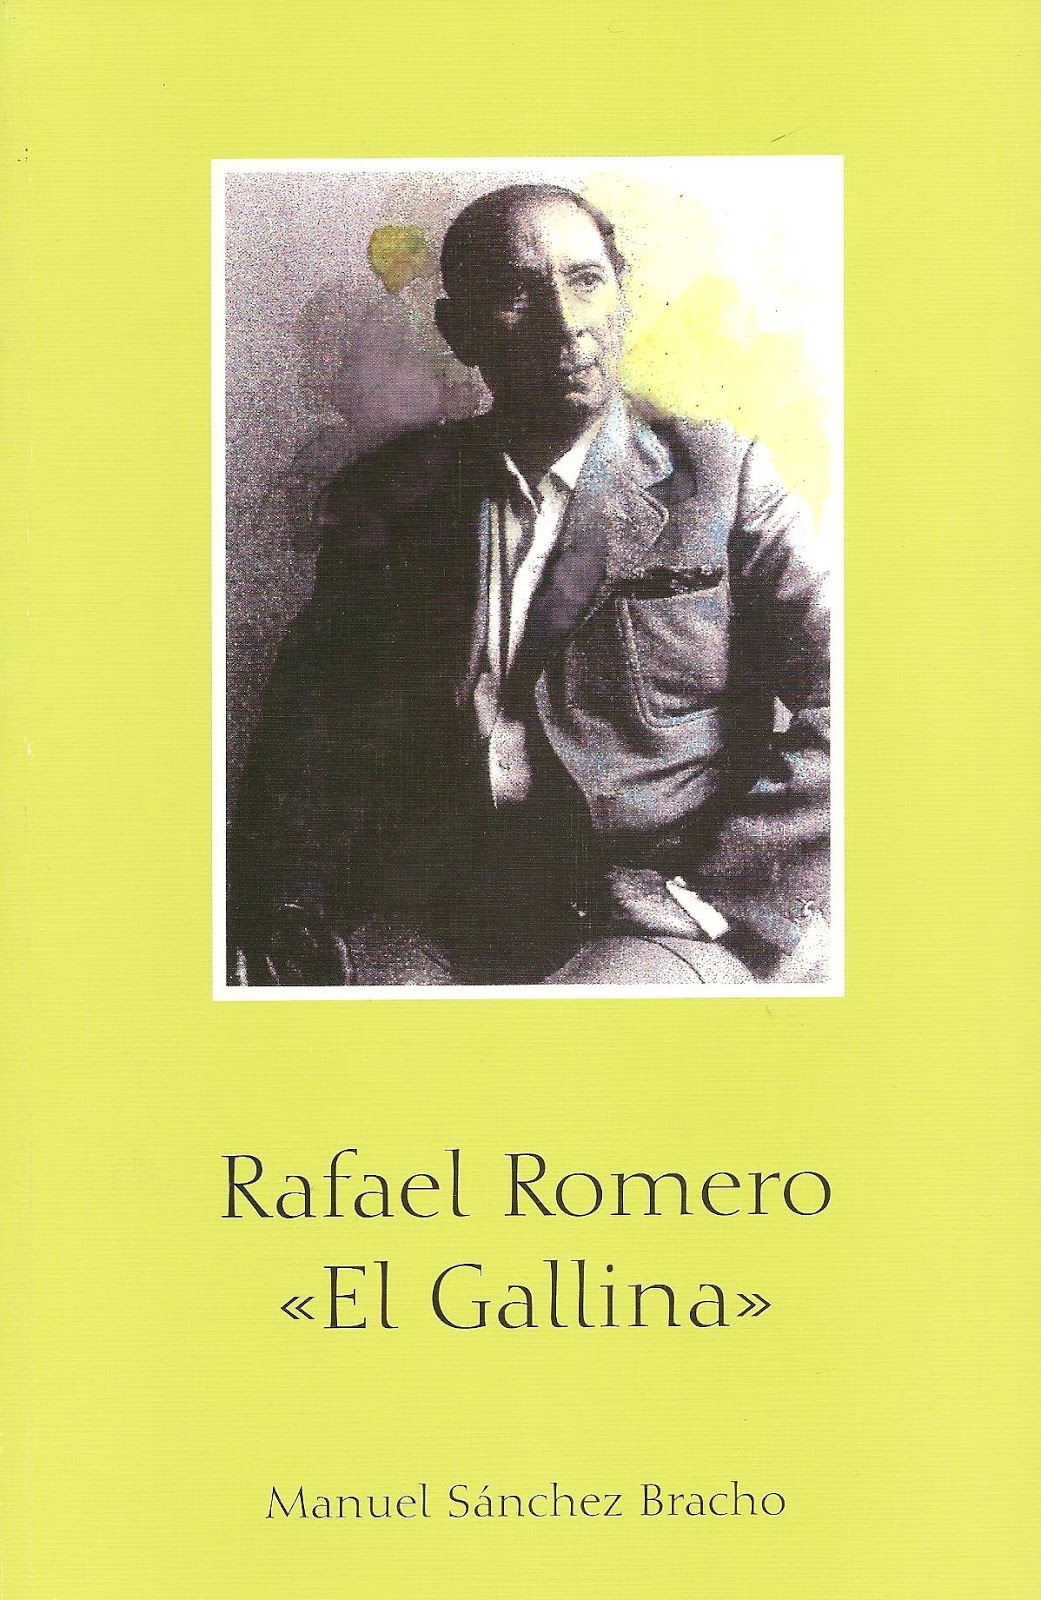 Rafael Romero “El Gallina”